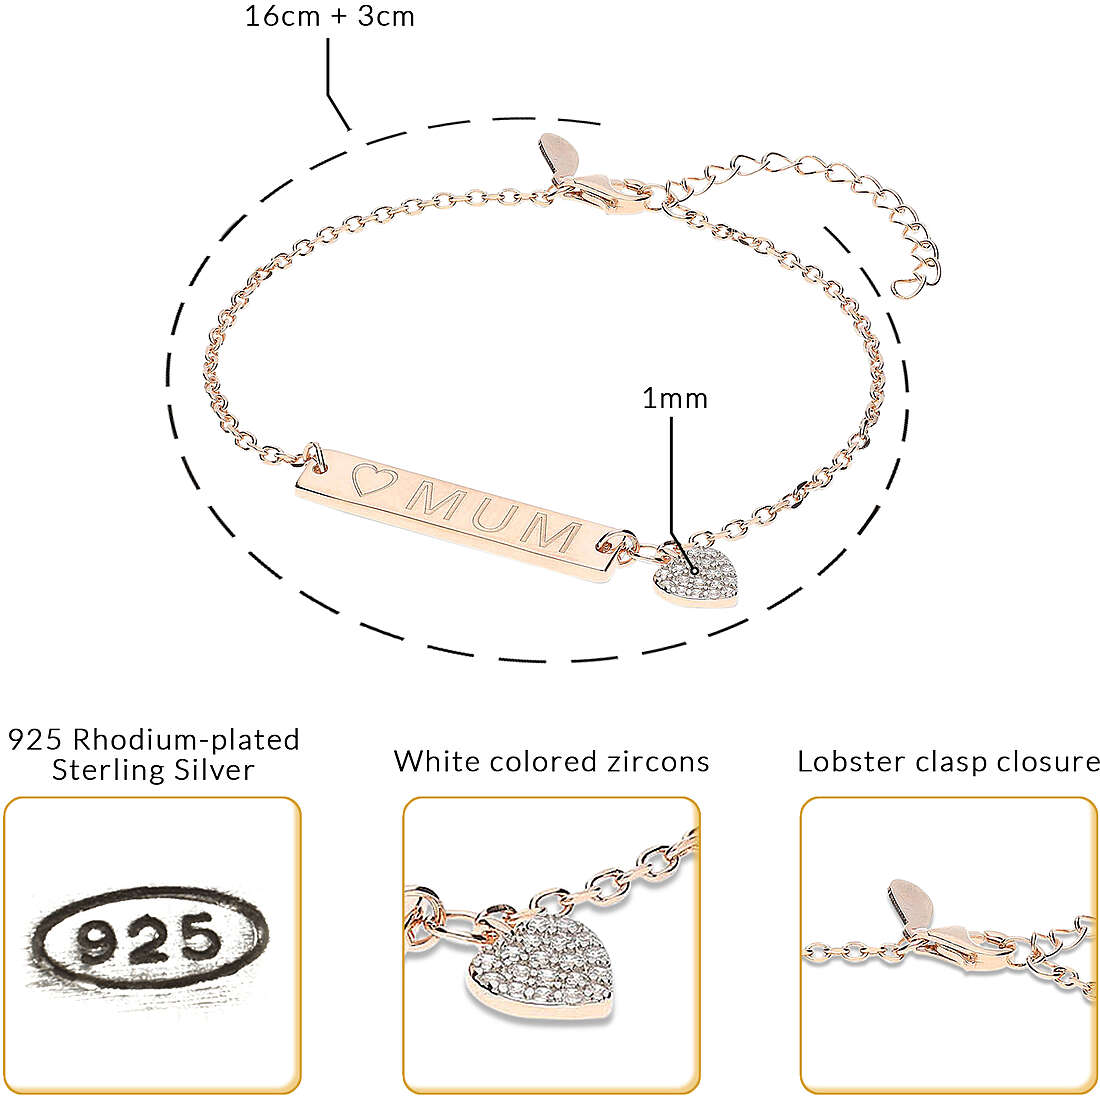 bracelet woman Charms/Beads 925 Silver jewel GioiaPura Tvb mamma INS028BR253RSWH